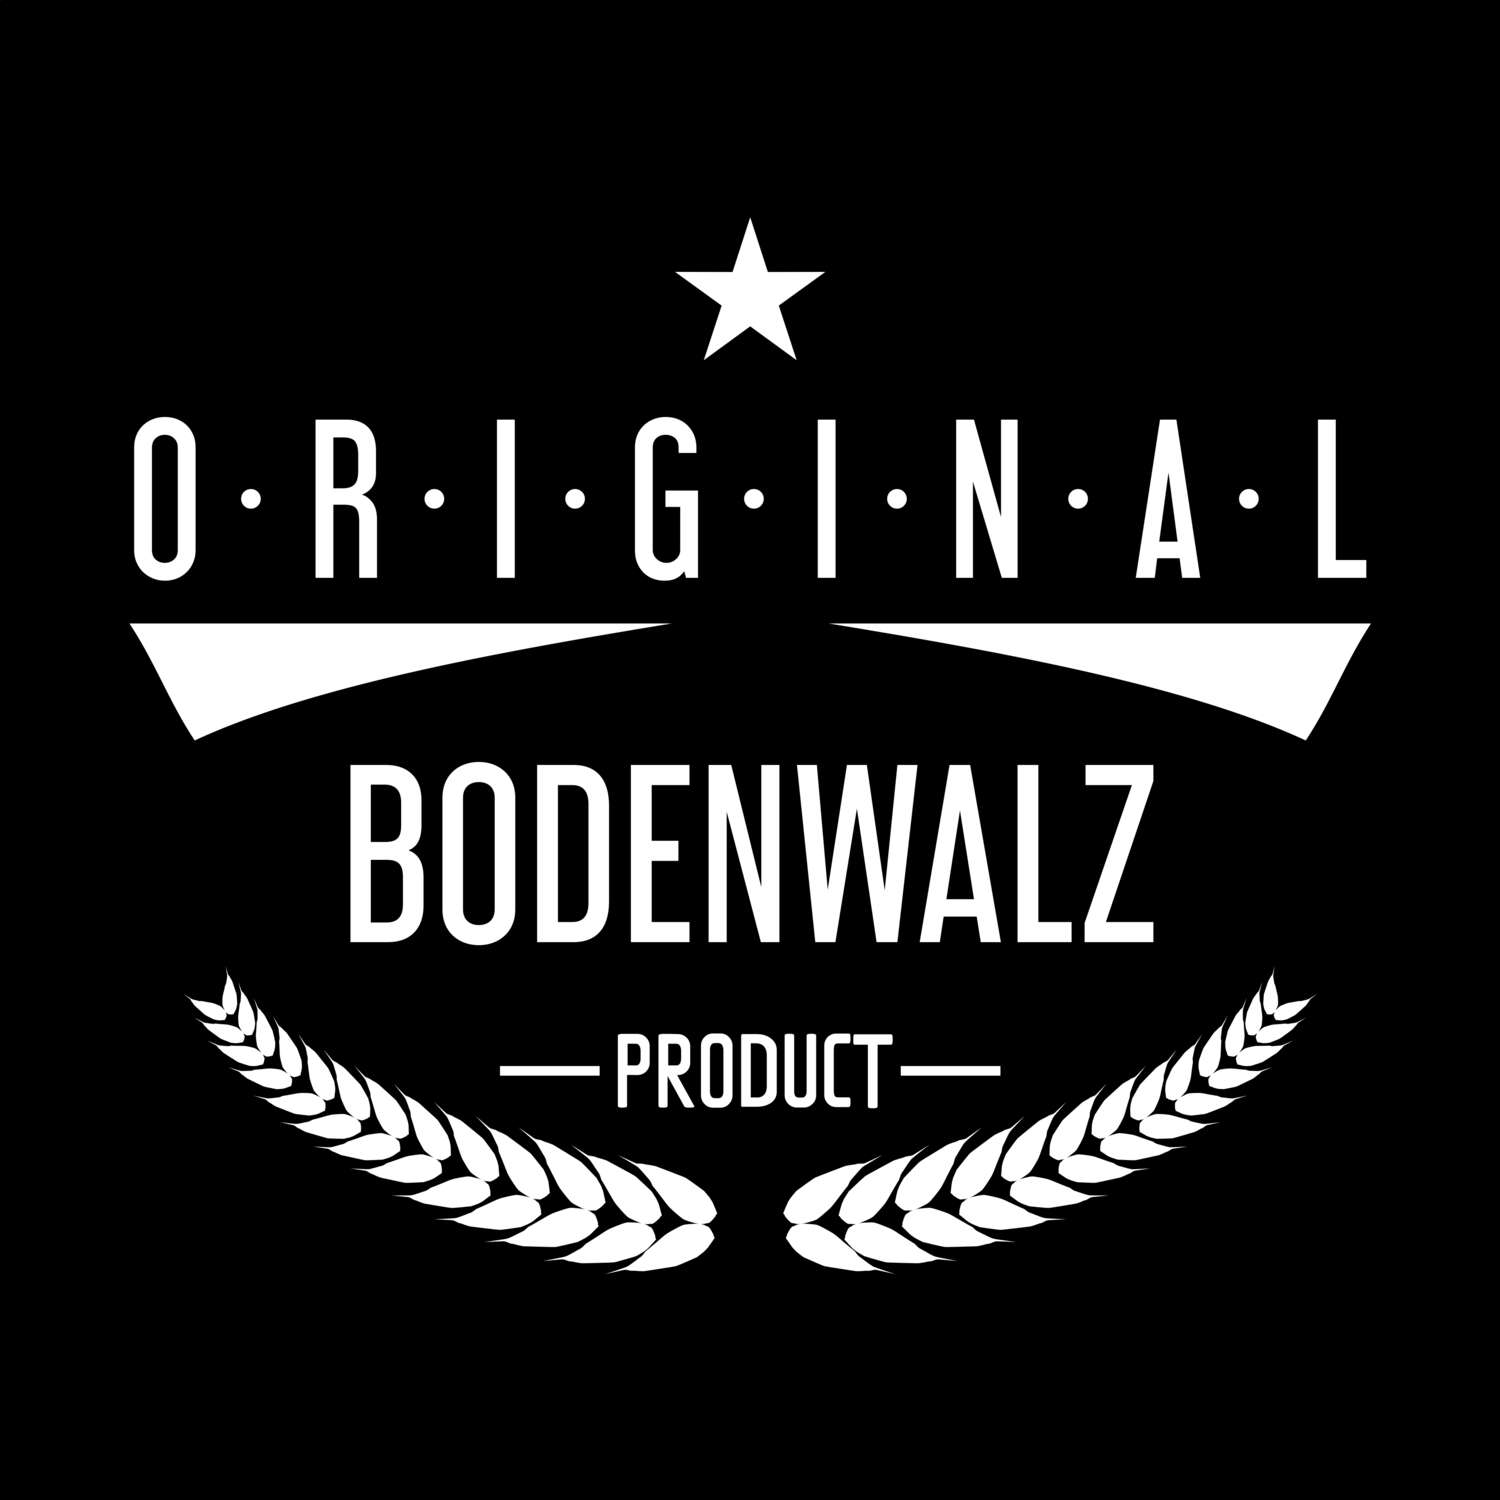 Bodenwalz T-Shirt »Original Product«